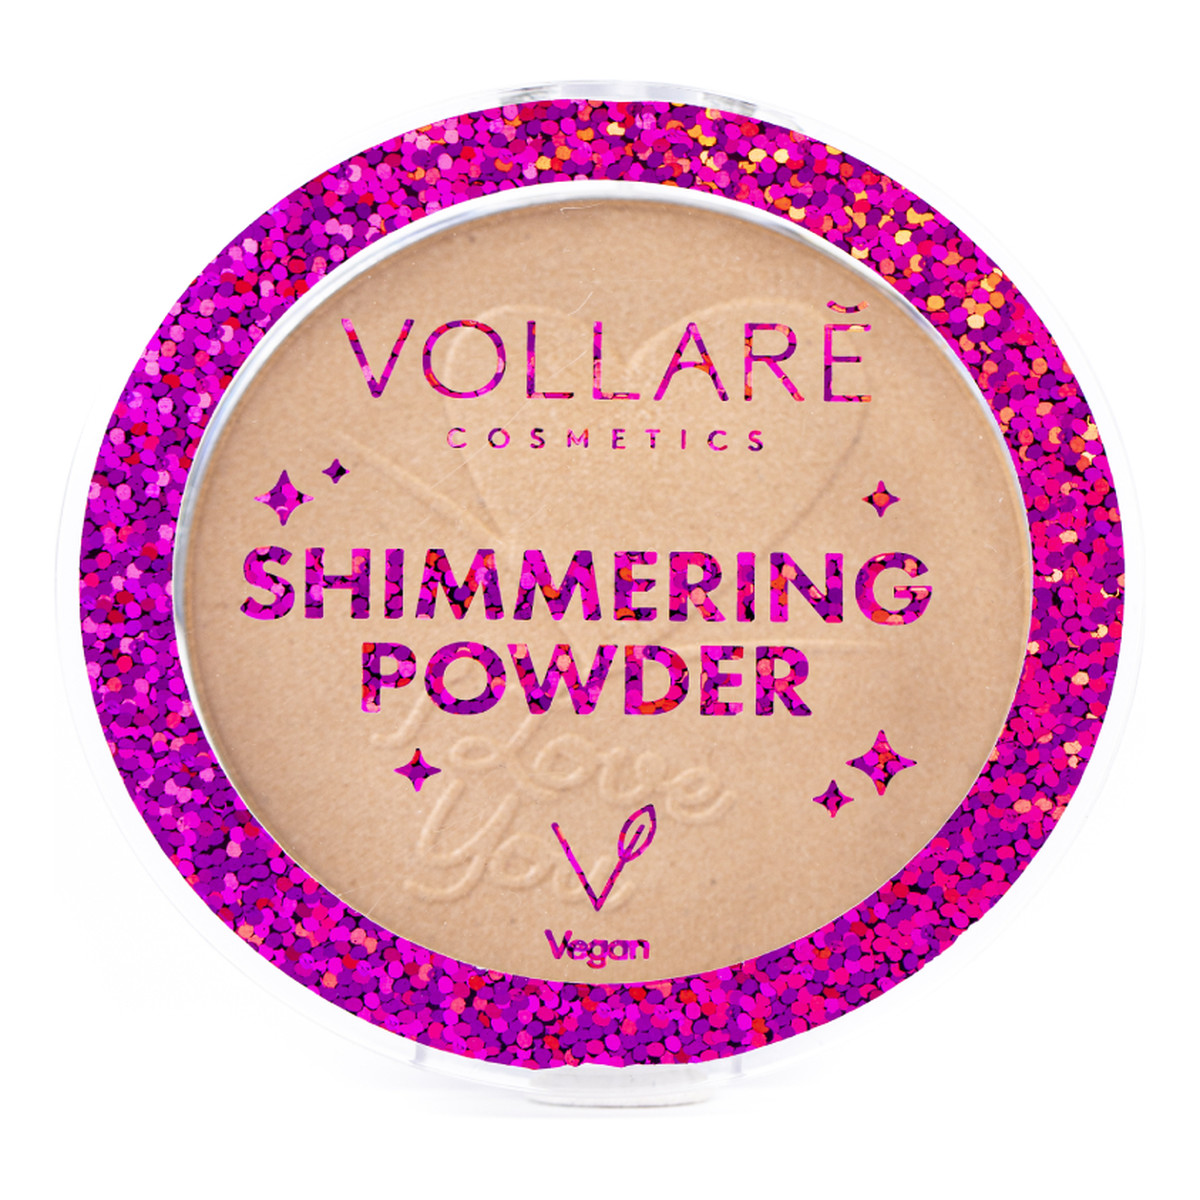 Vollare Shimmering Powder puder rozświetlający 8g